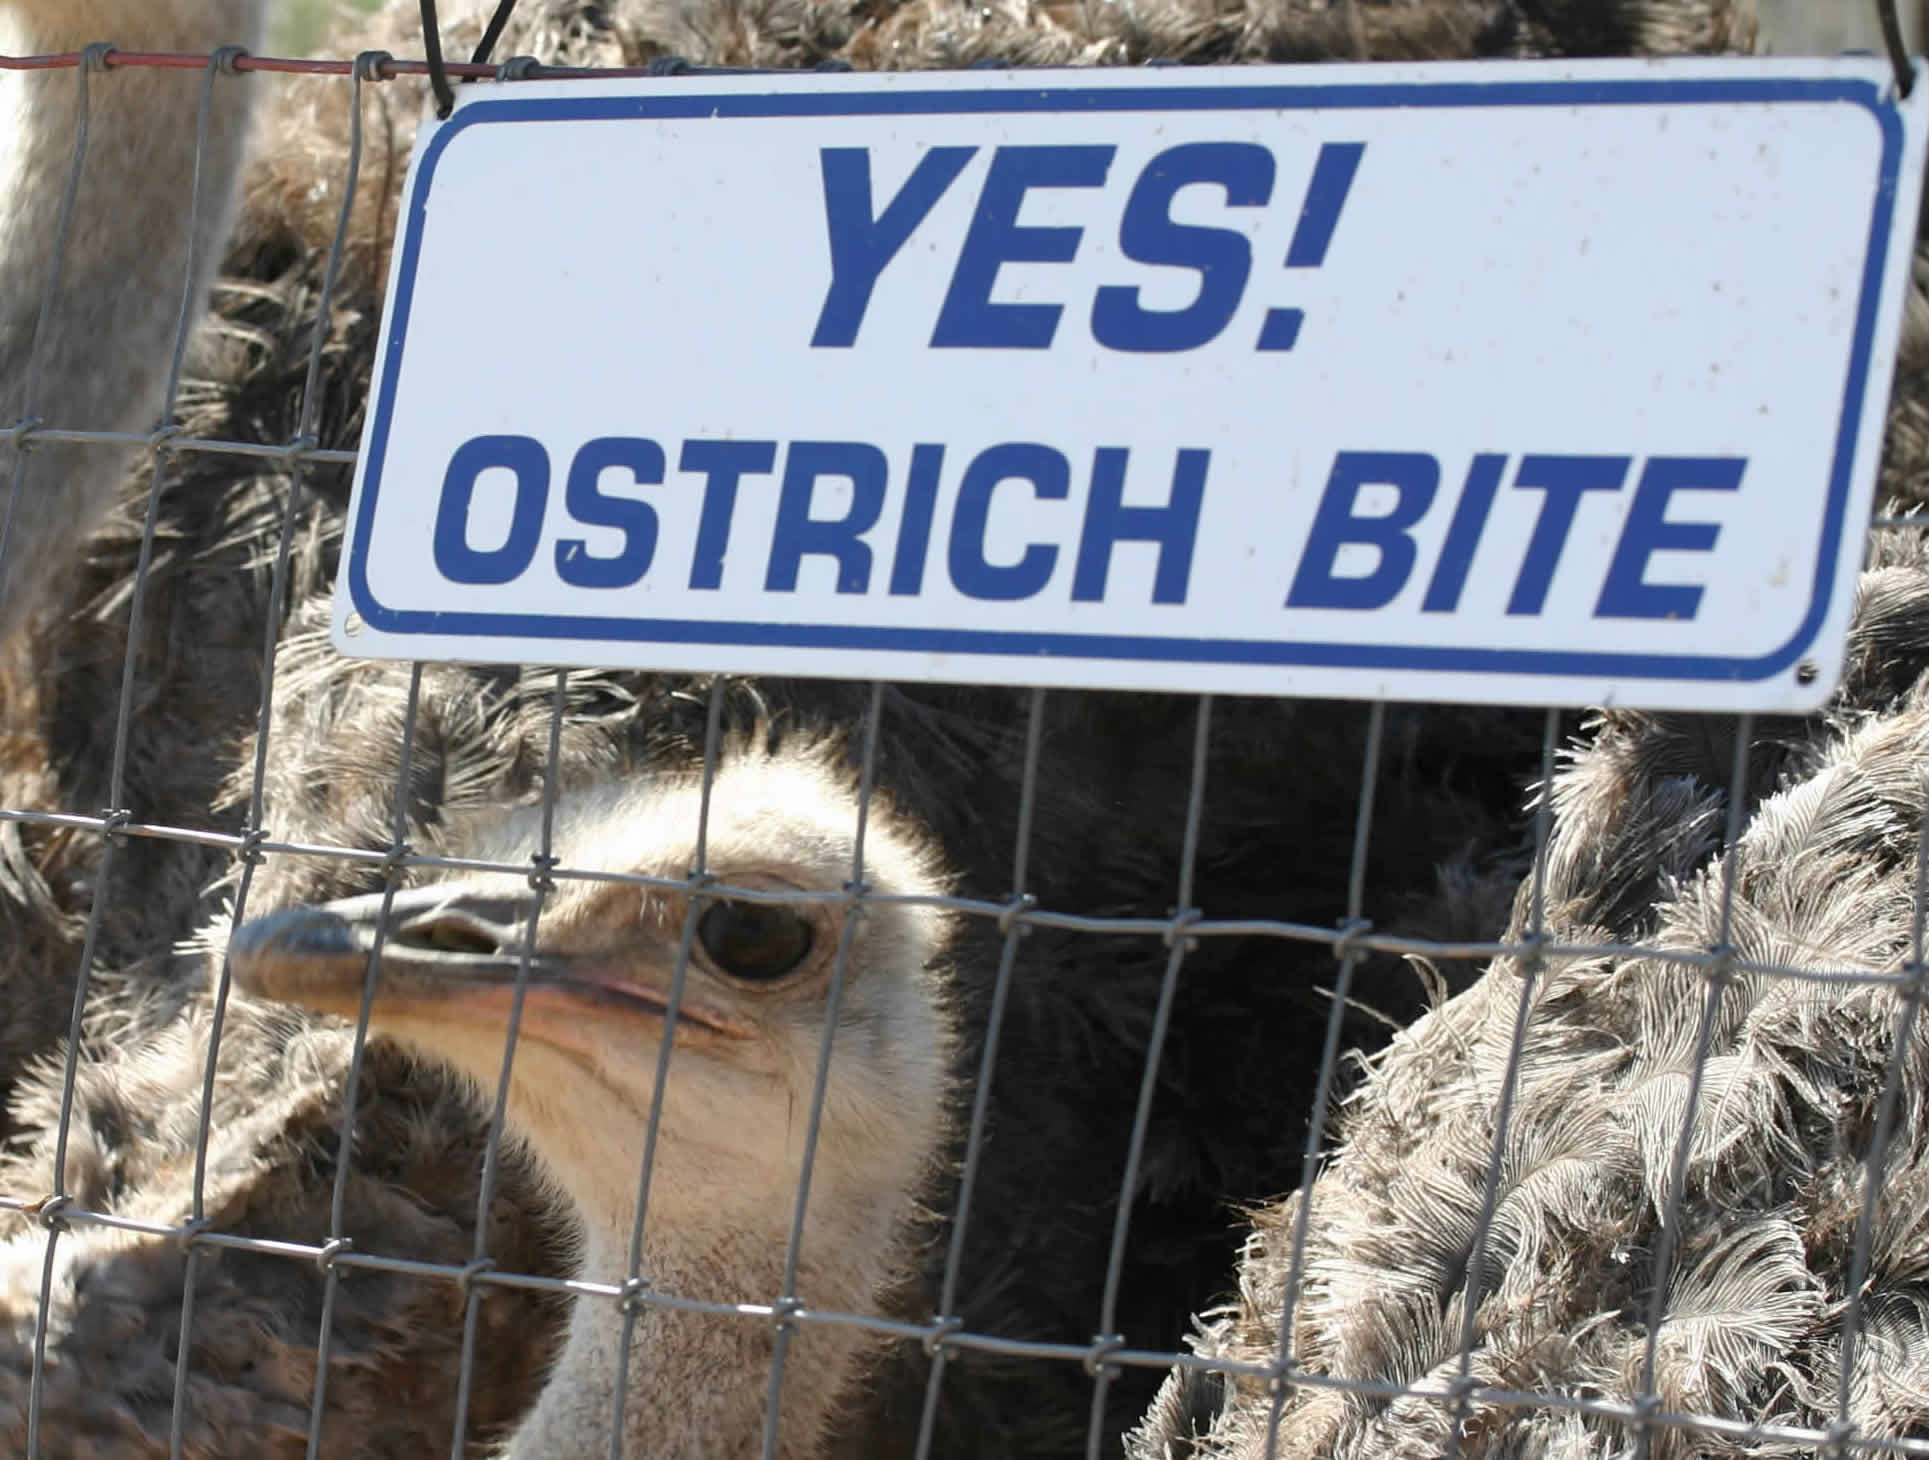 ostriches bite sign